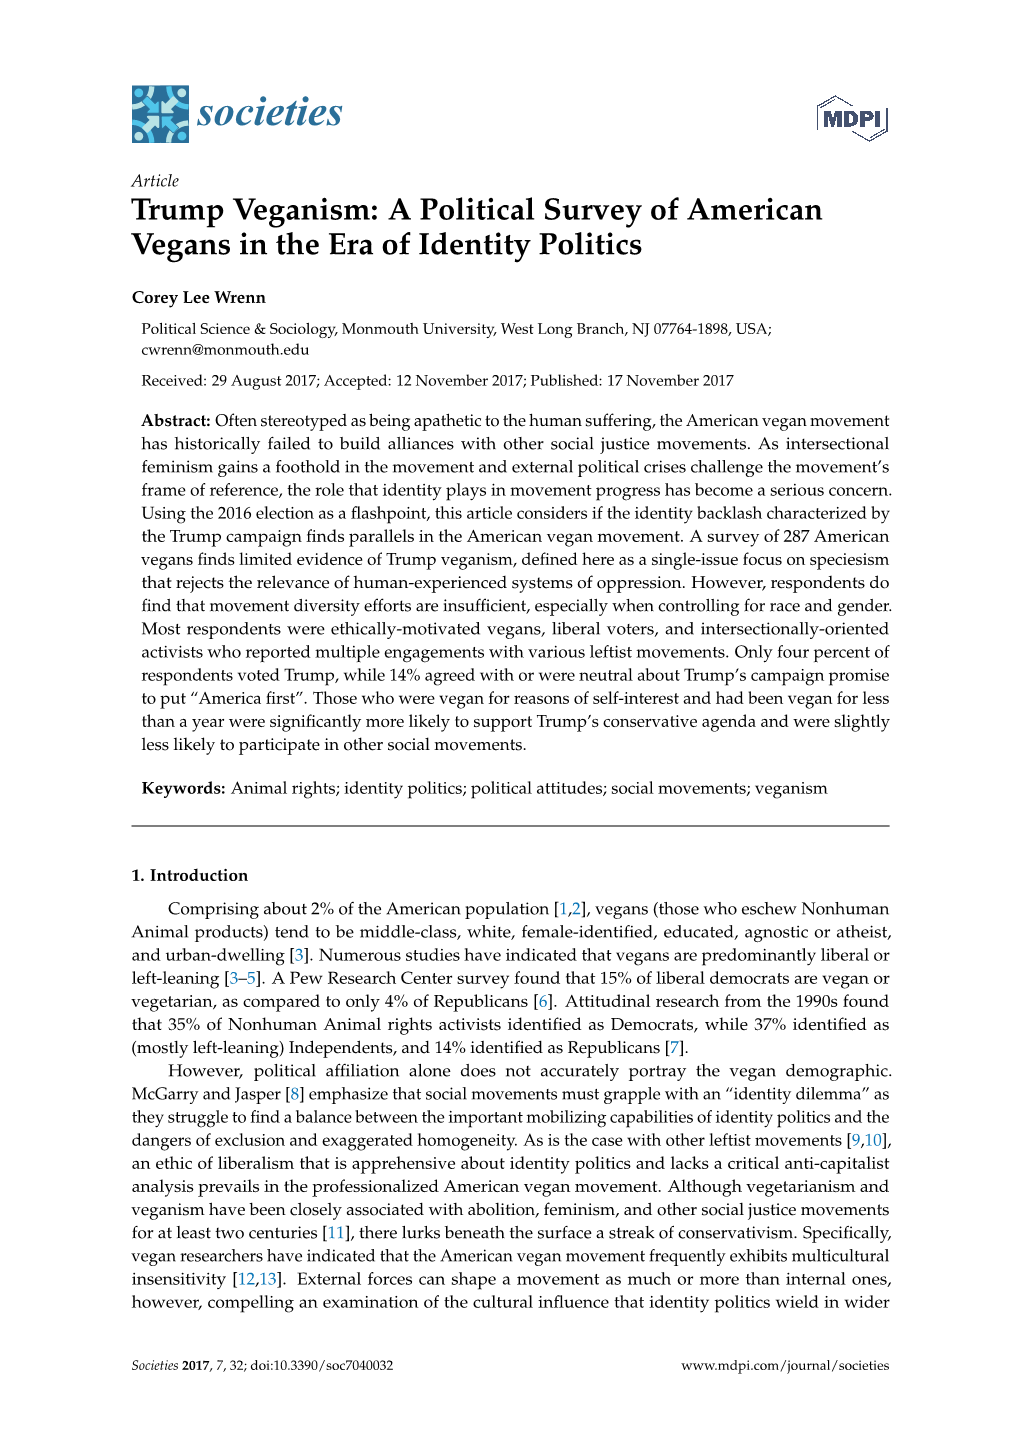 Trump Veganism: a Political Survey of American Vegans in the Era of Identity Politics